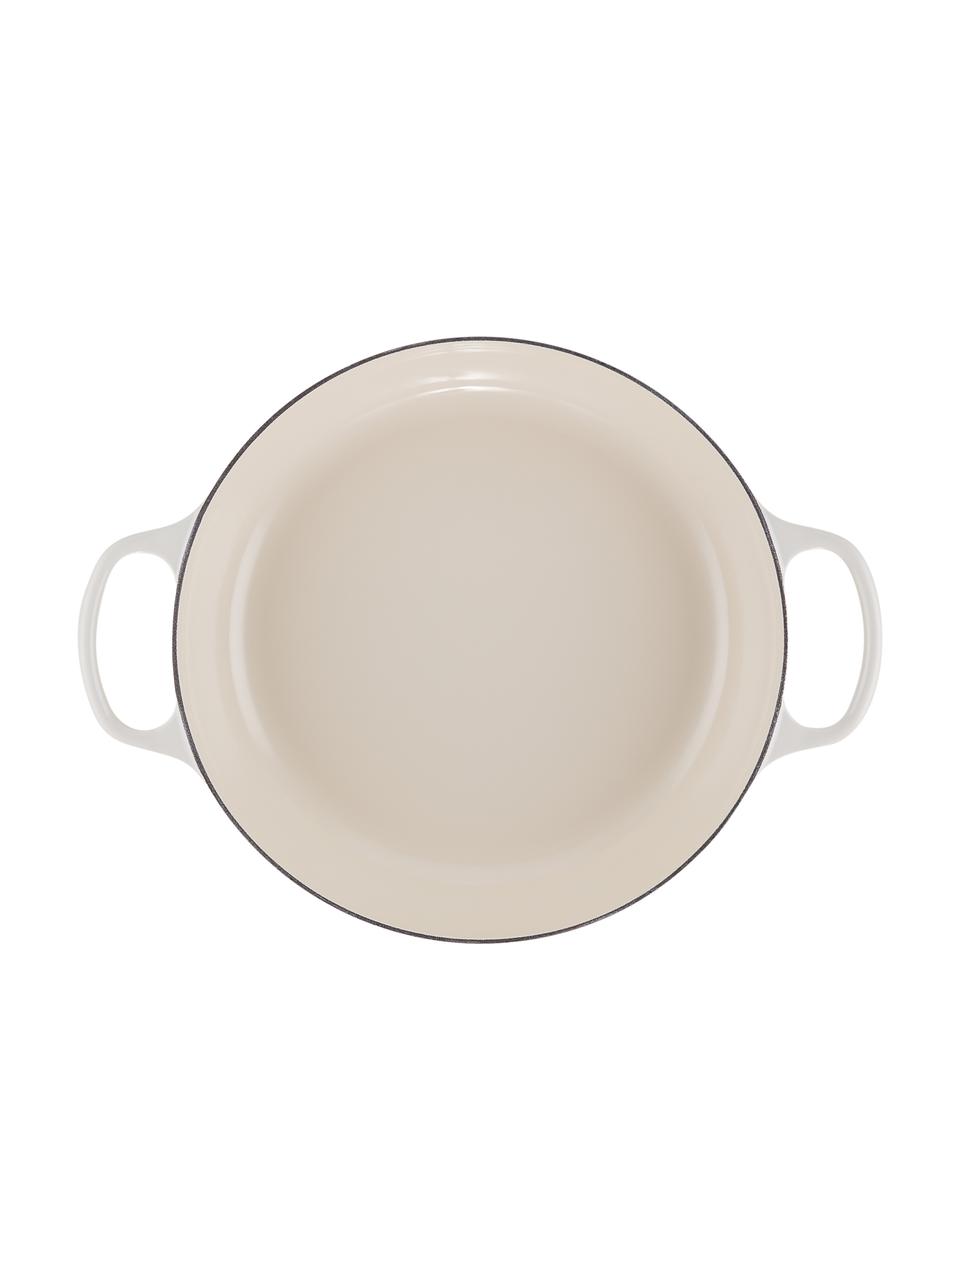 Litinový hrnec Gourmet Signature Collection, Smaltovaná litina, Odstíny bílé, Ø 30 cm, V 12 cm